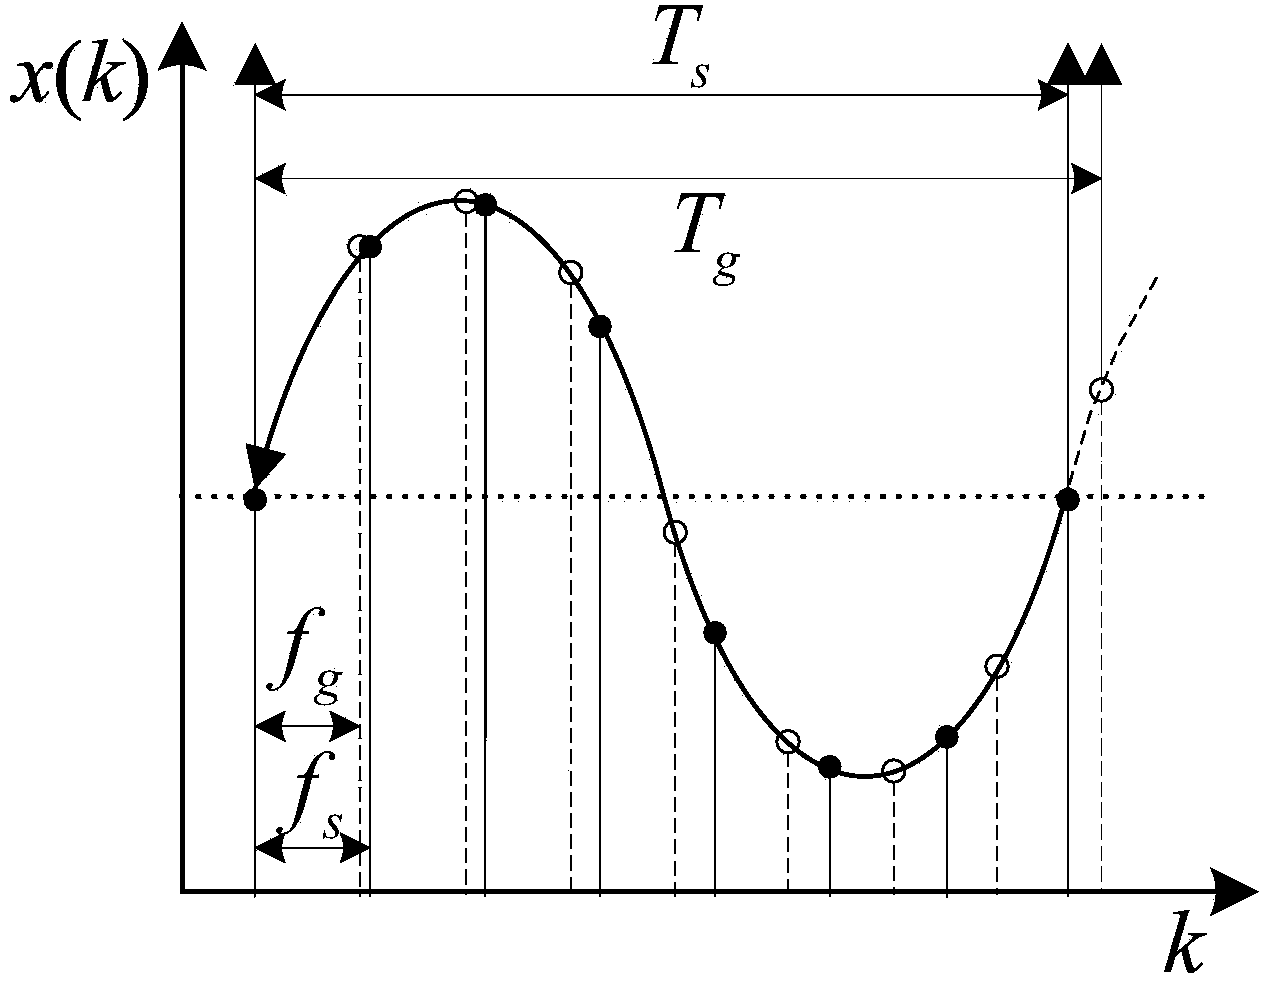 Dynamic signal phasor measurement method based on time domain quasi-synchronization